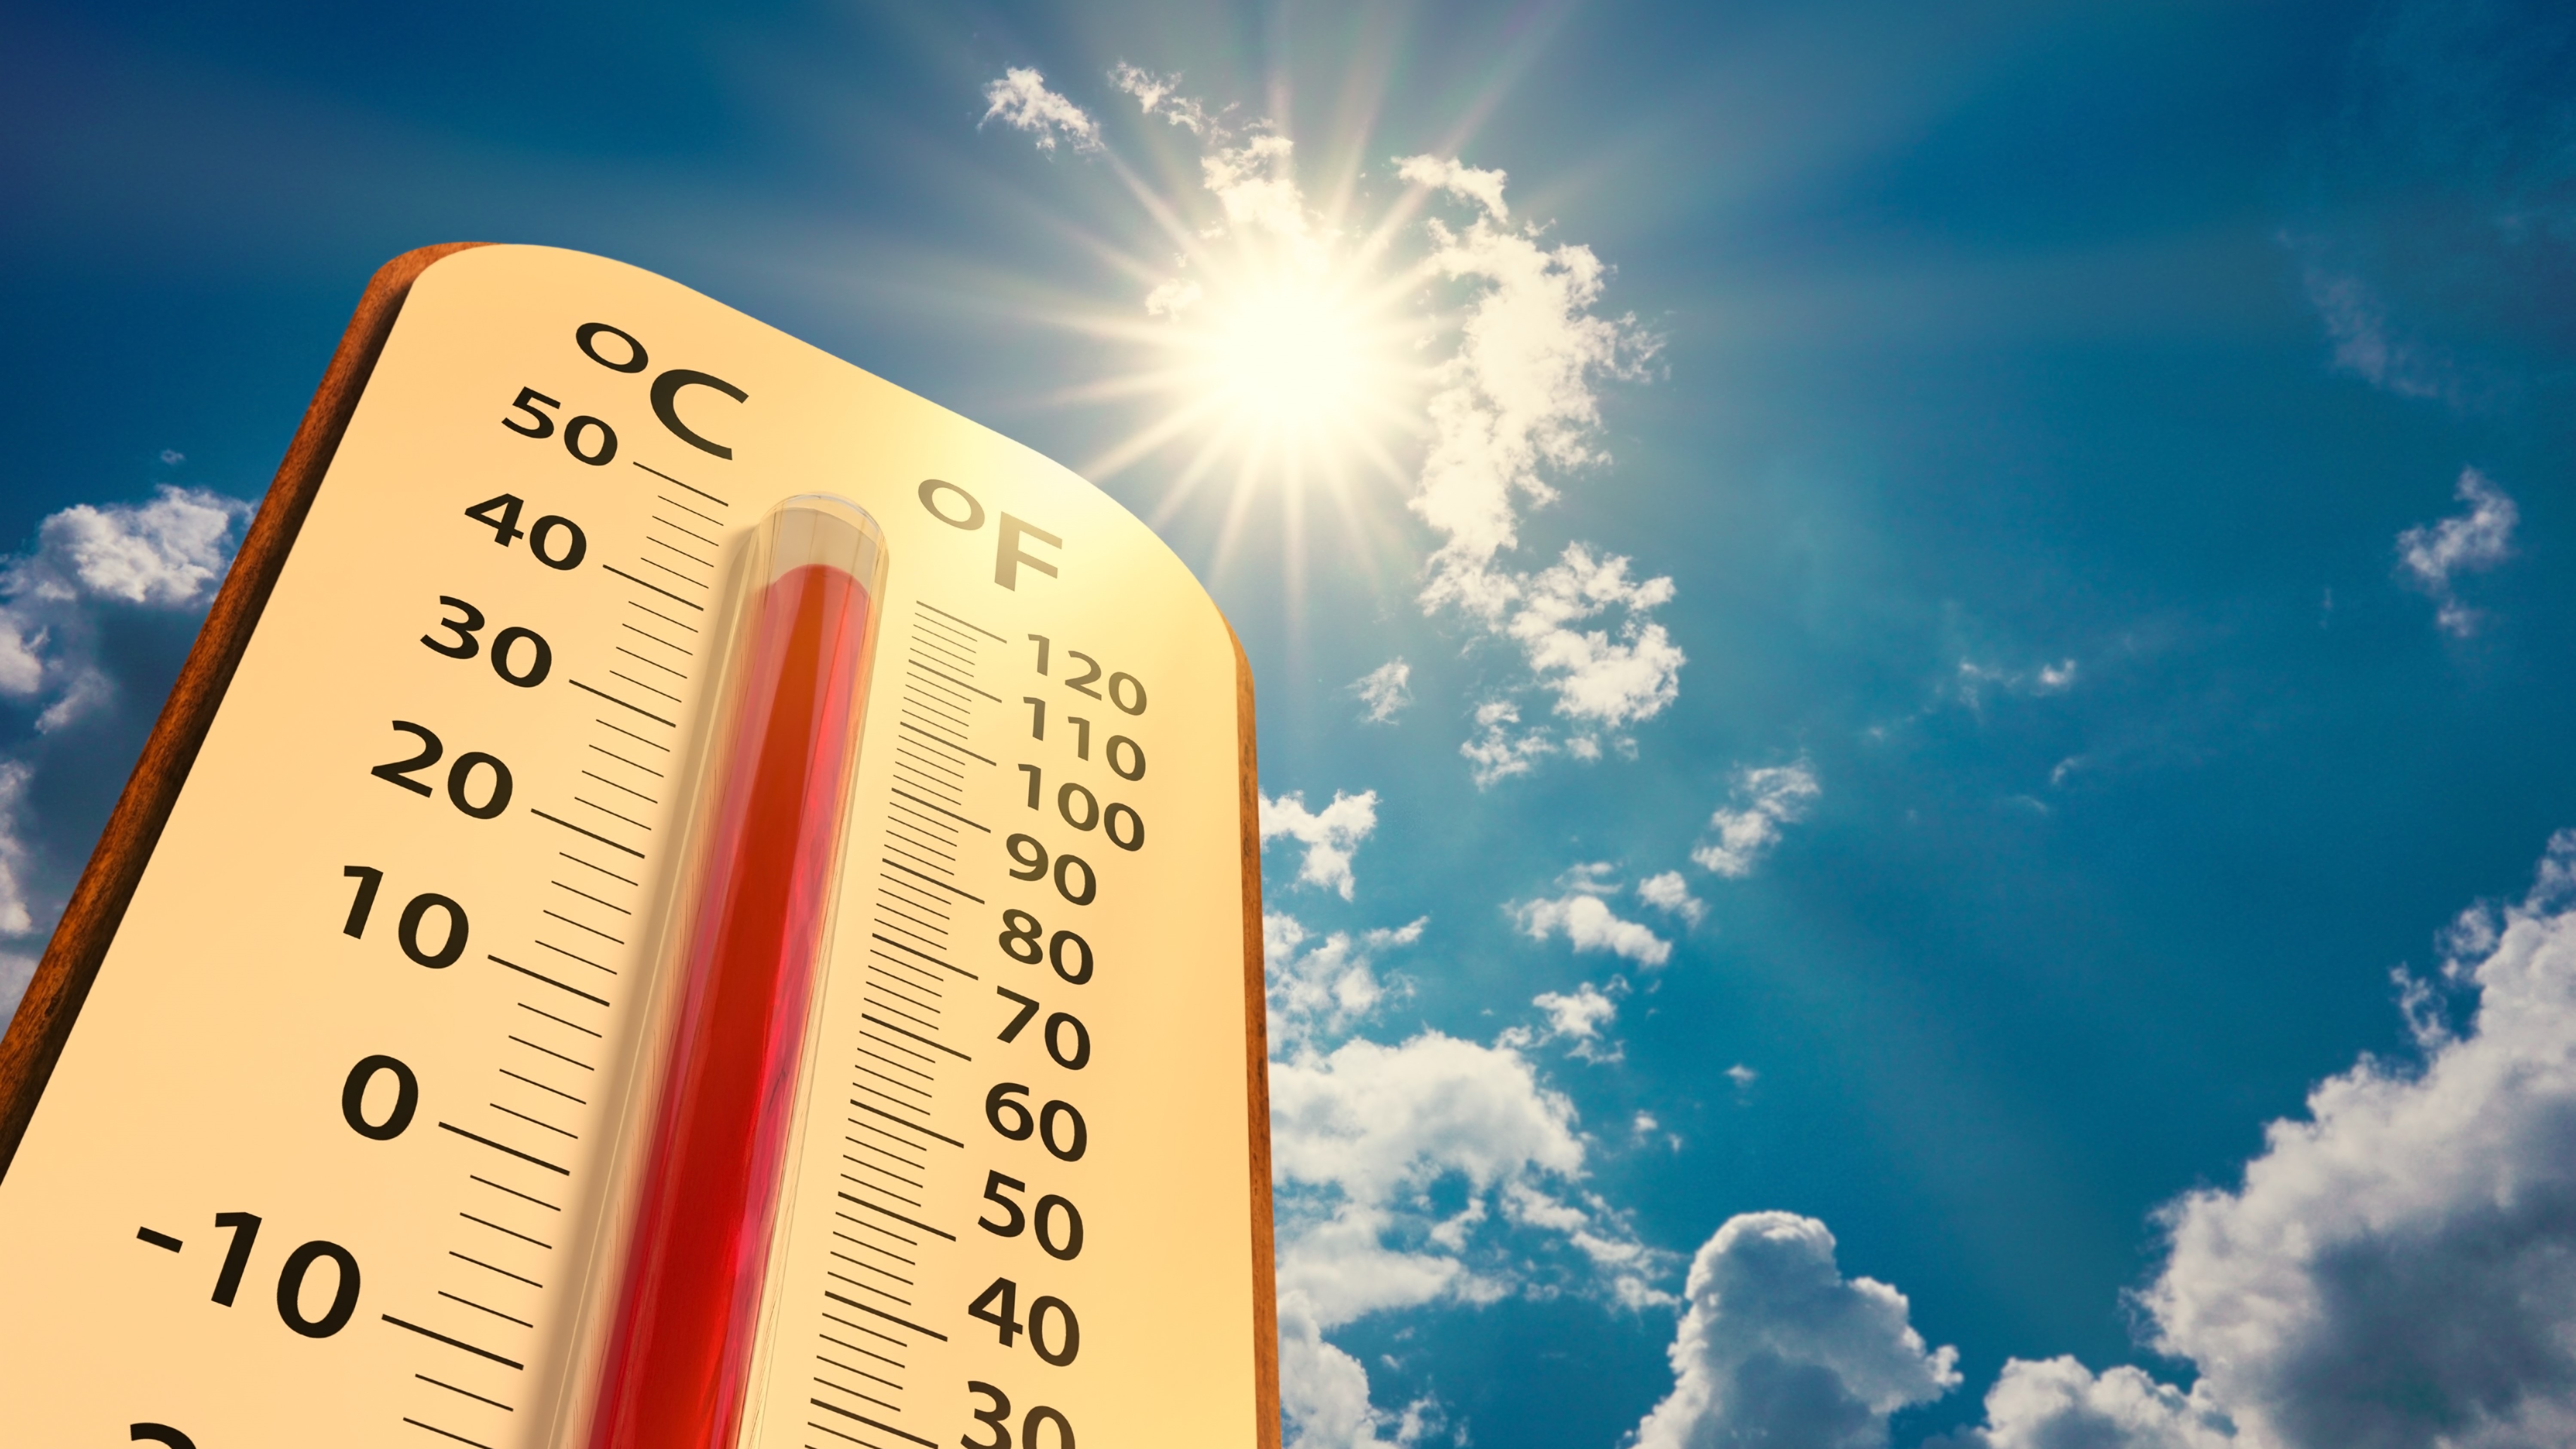 Record heat brings higher energy bills, relief efforts